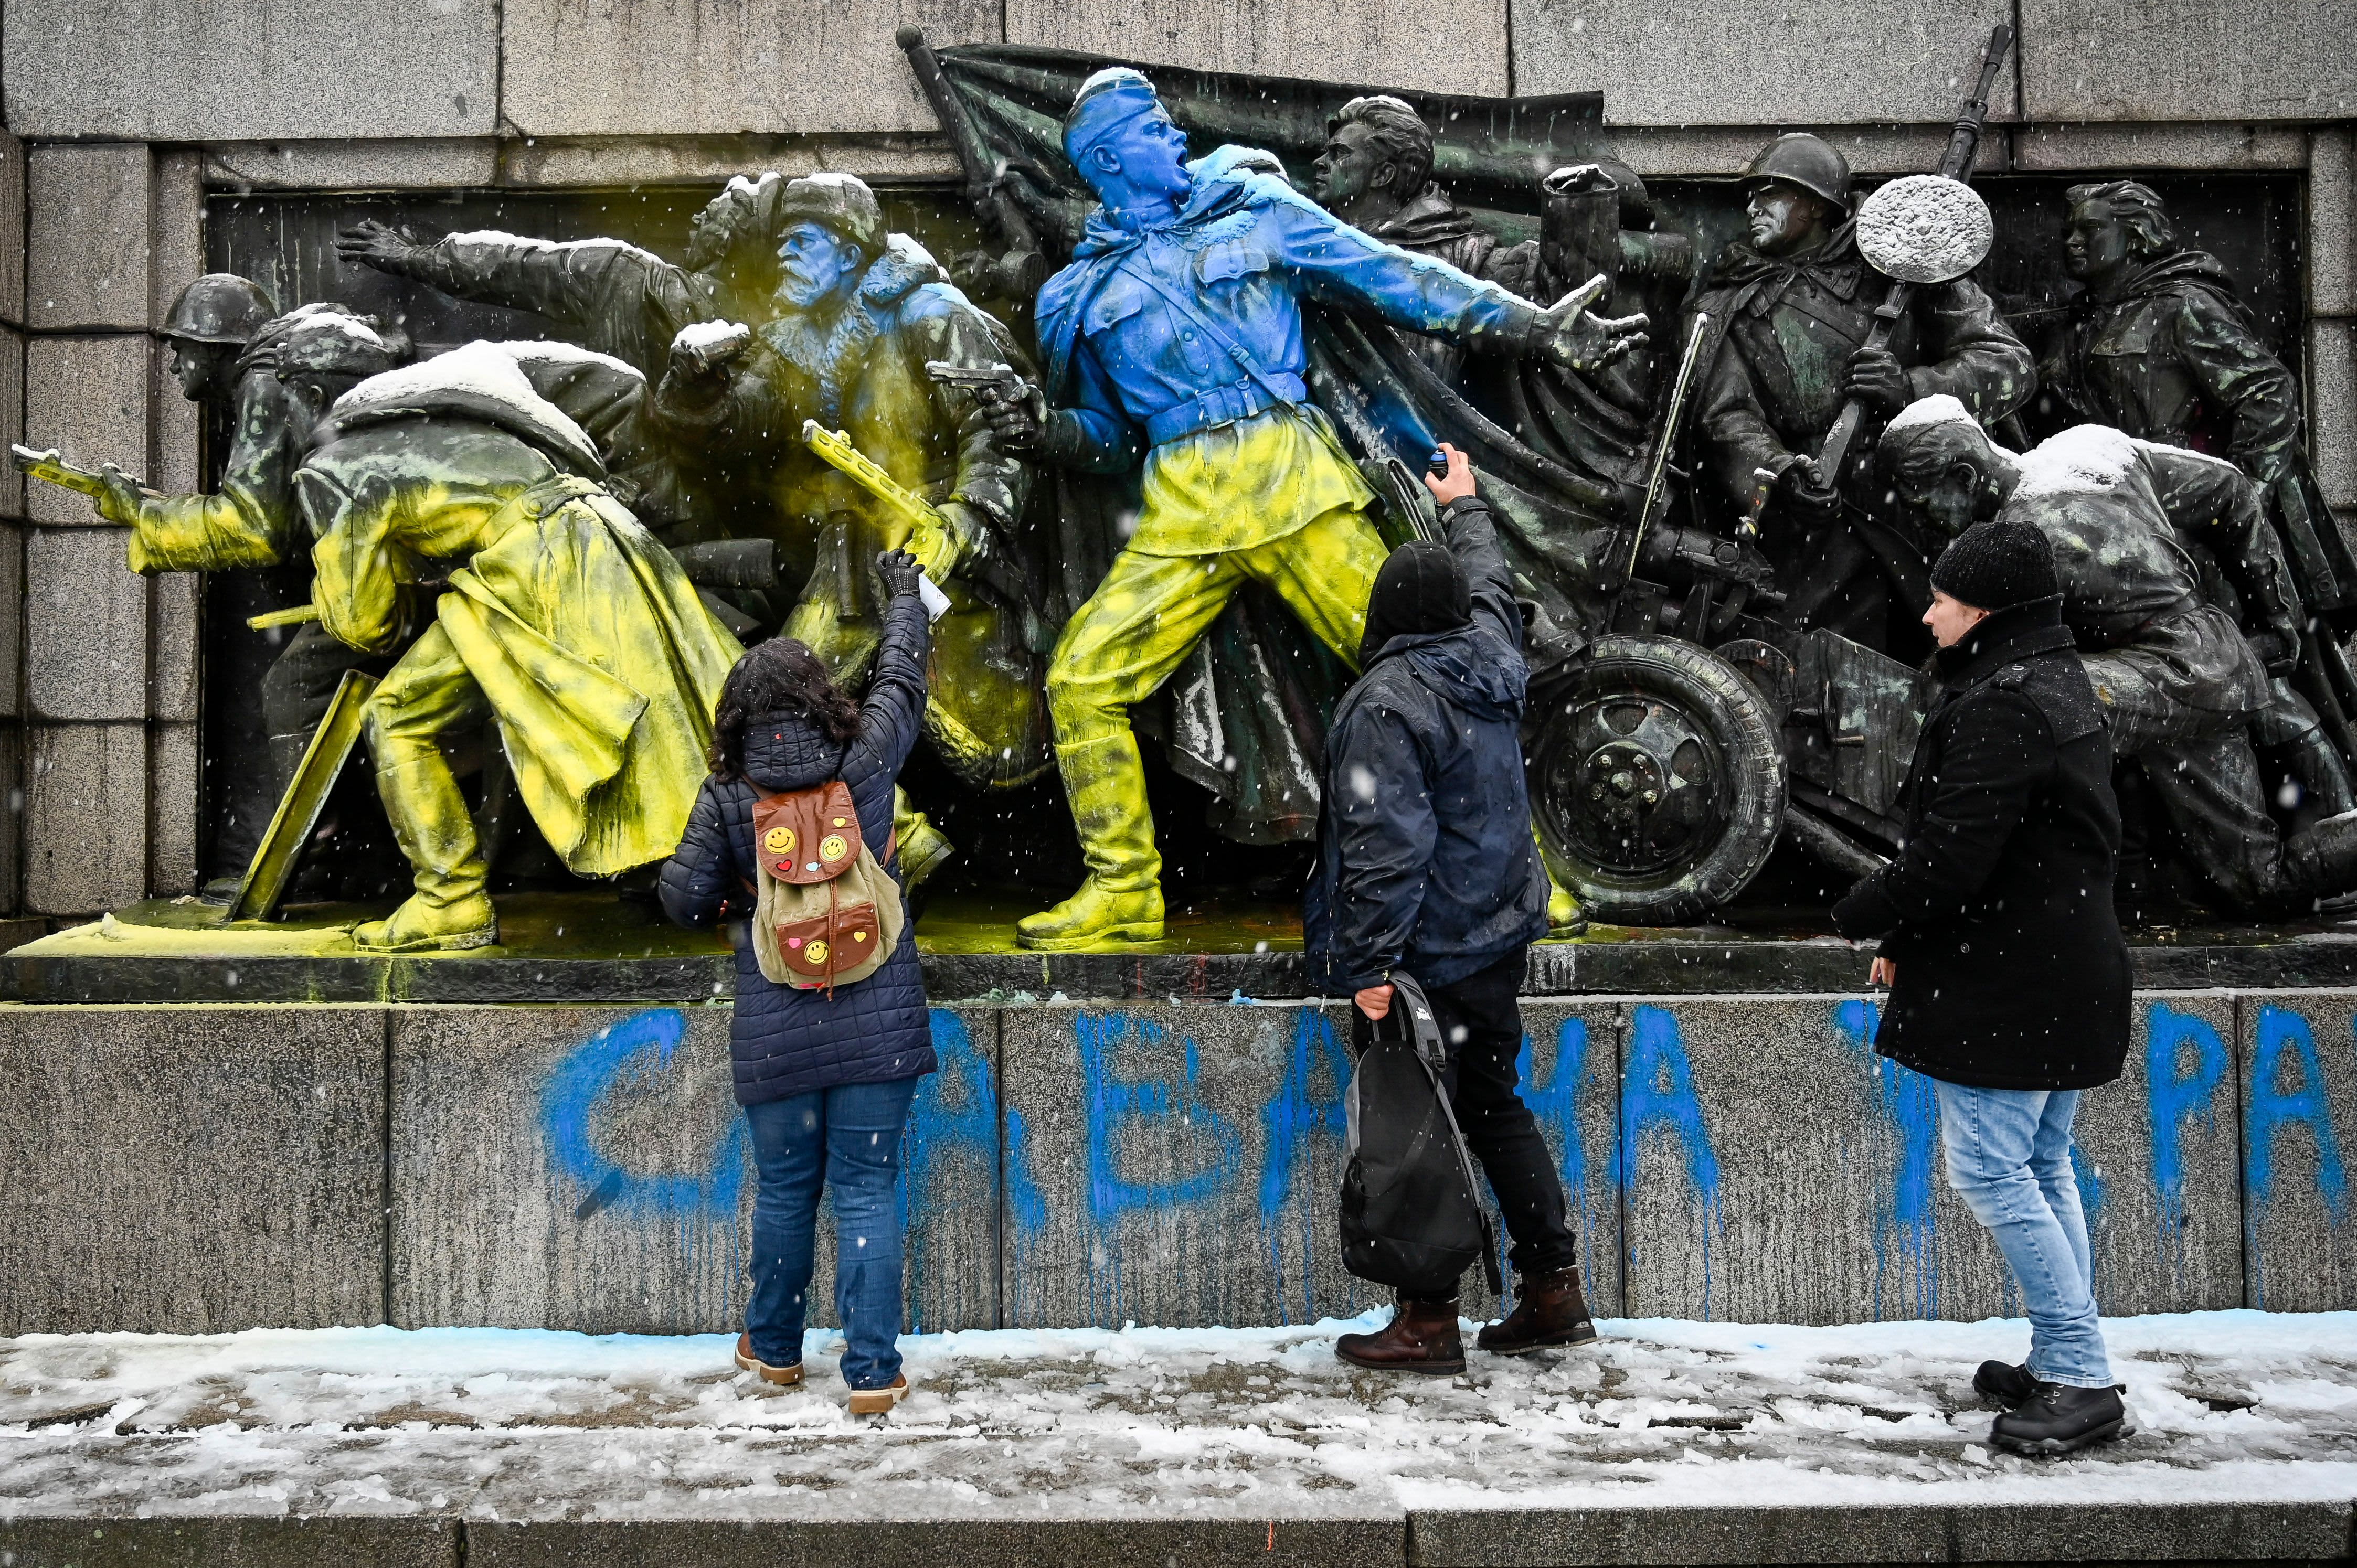 Freedom will prevail in Ukraine